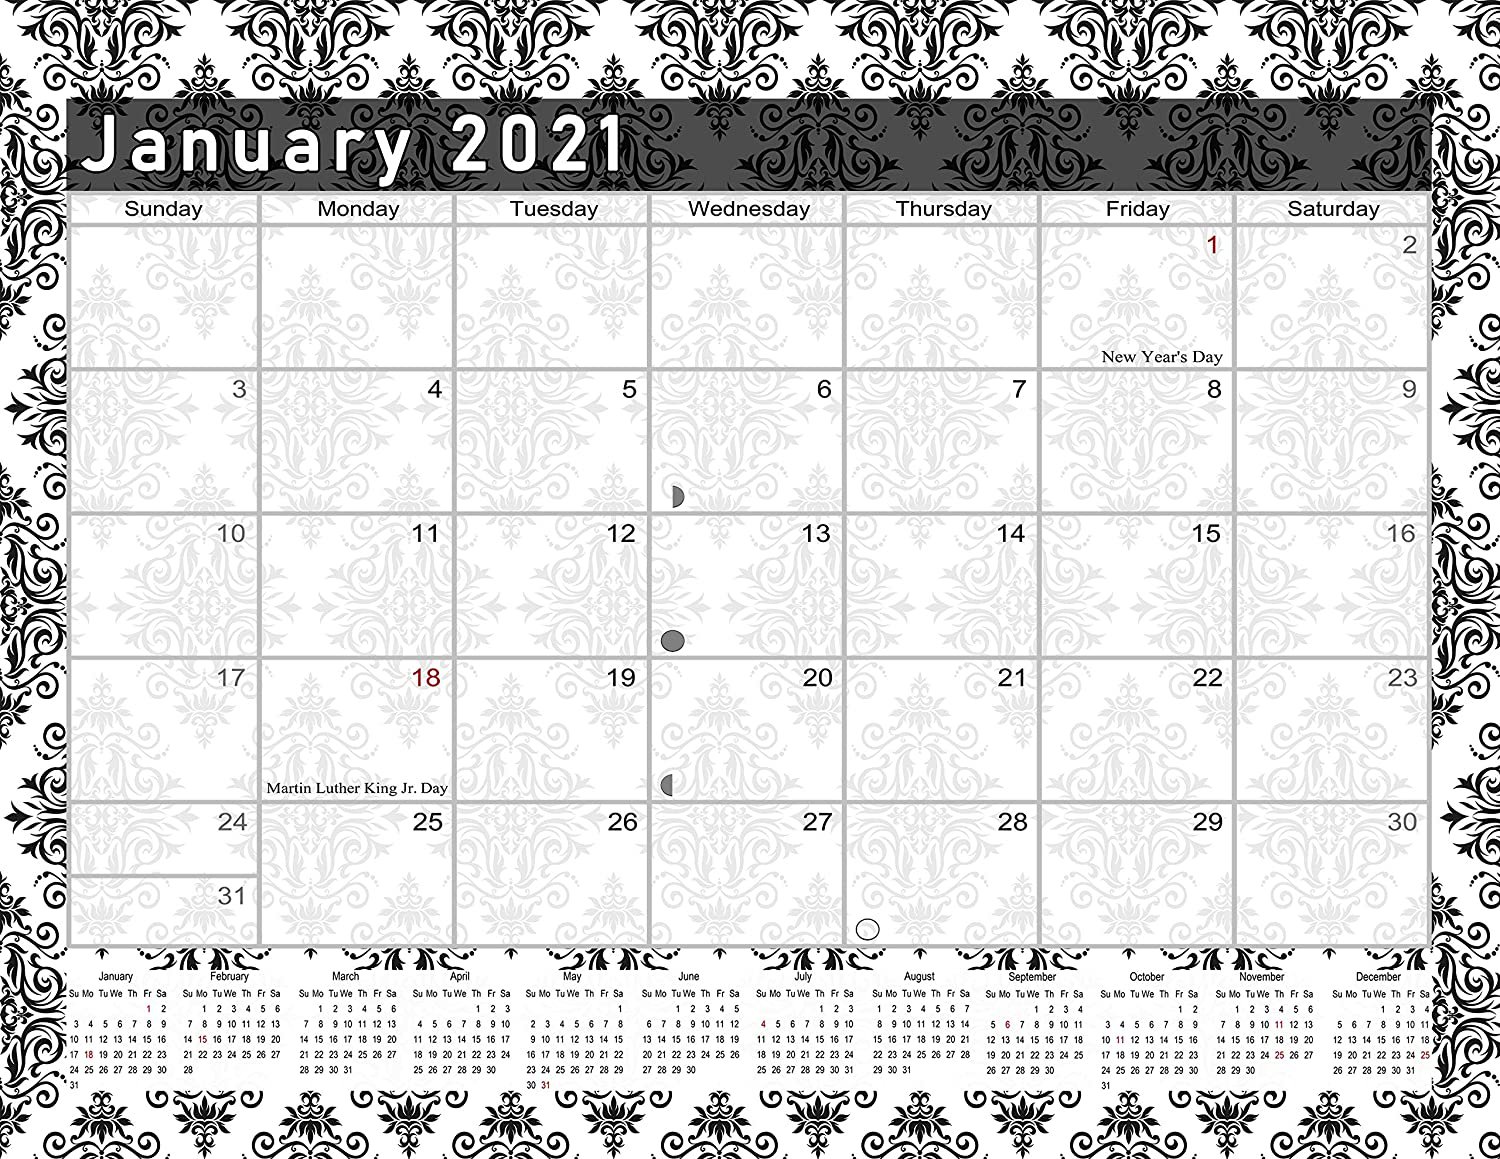 2021 Monthly Magnetic/Desk Calendar - 12 Months Desktop/Wall Calendar/Planner - (Edition #08)